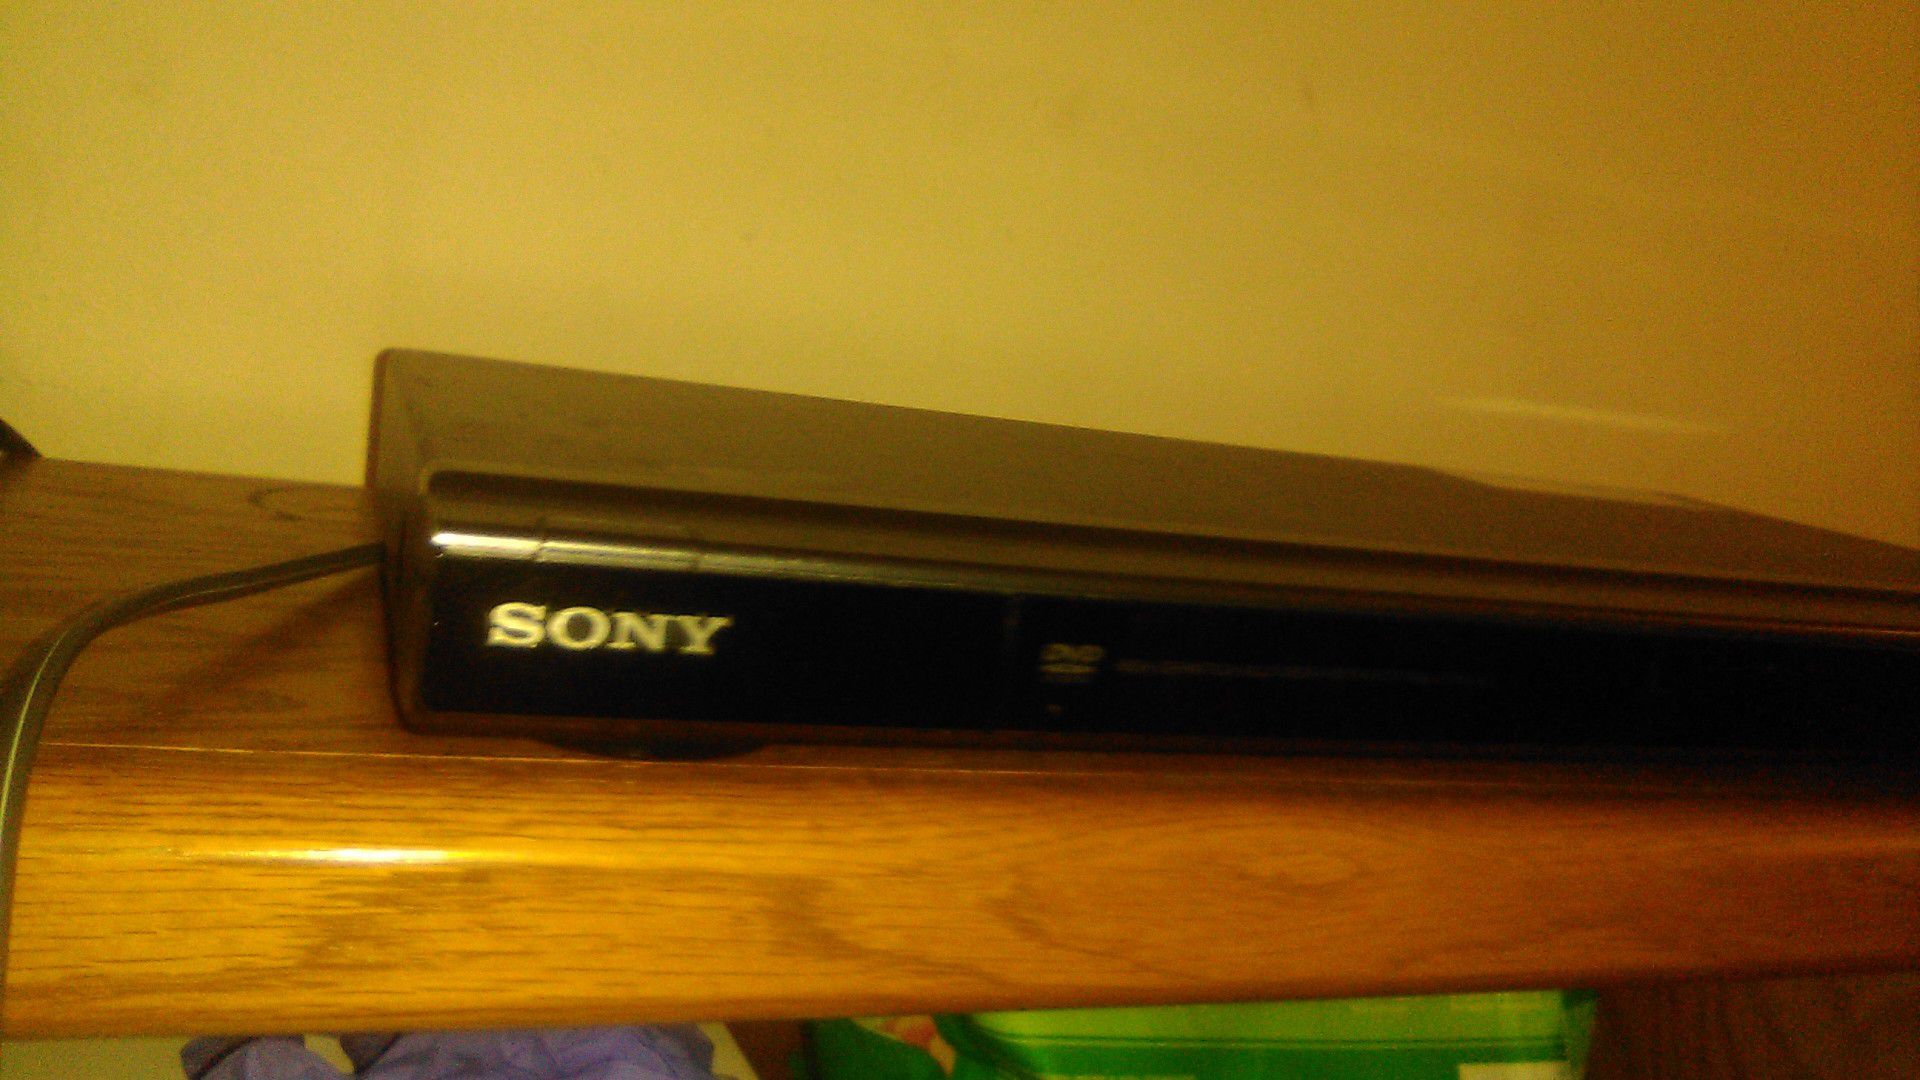 Sony HDMI dvd player